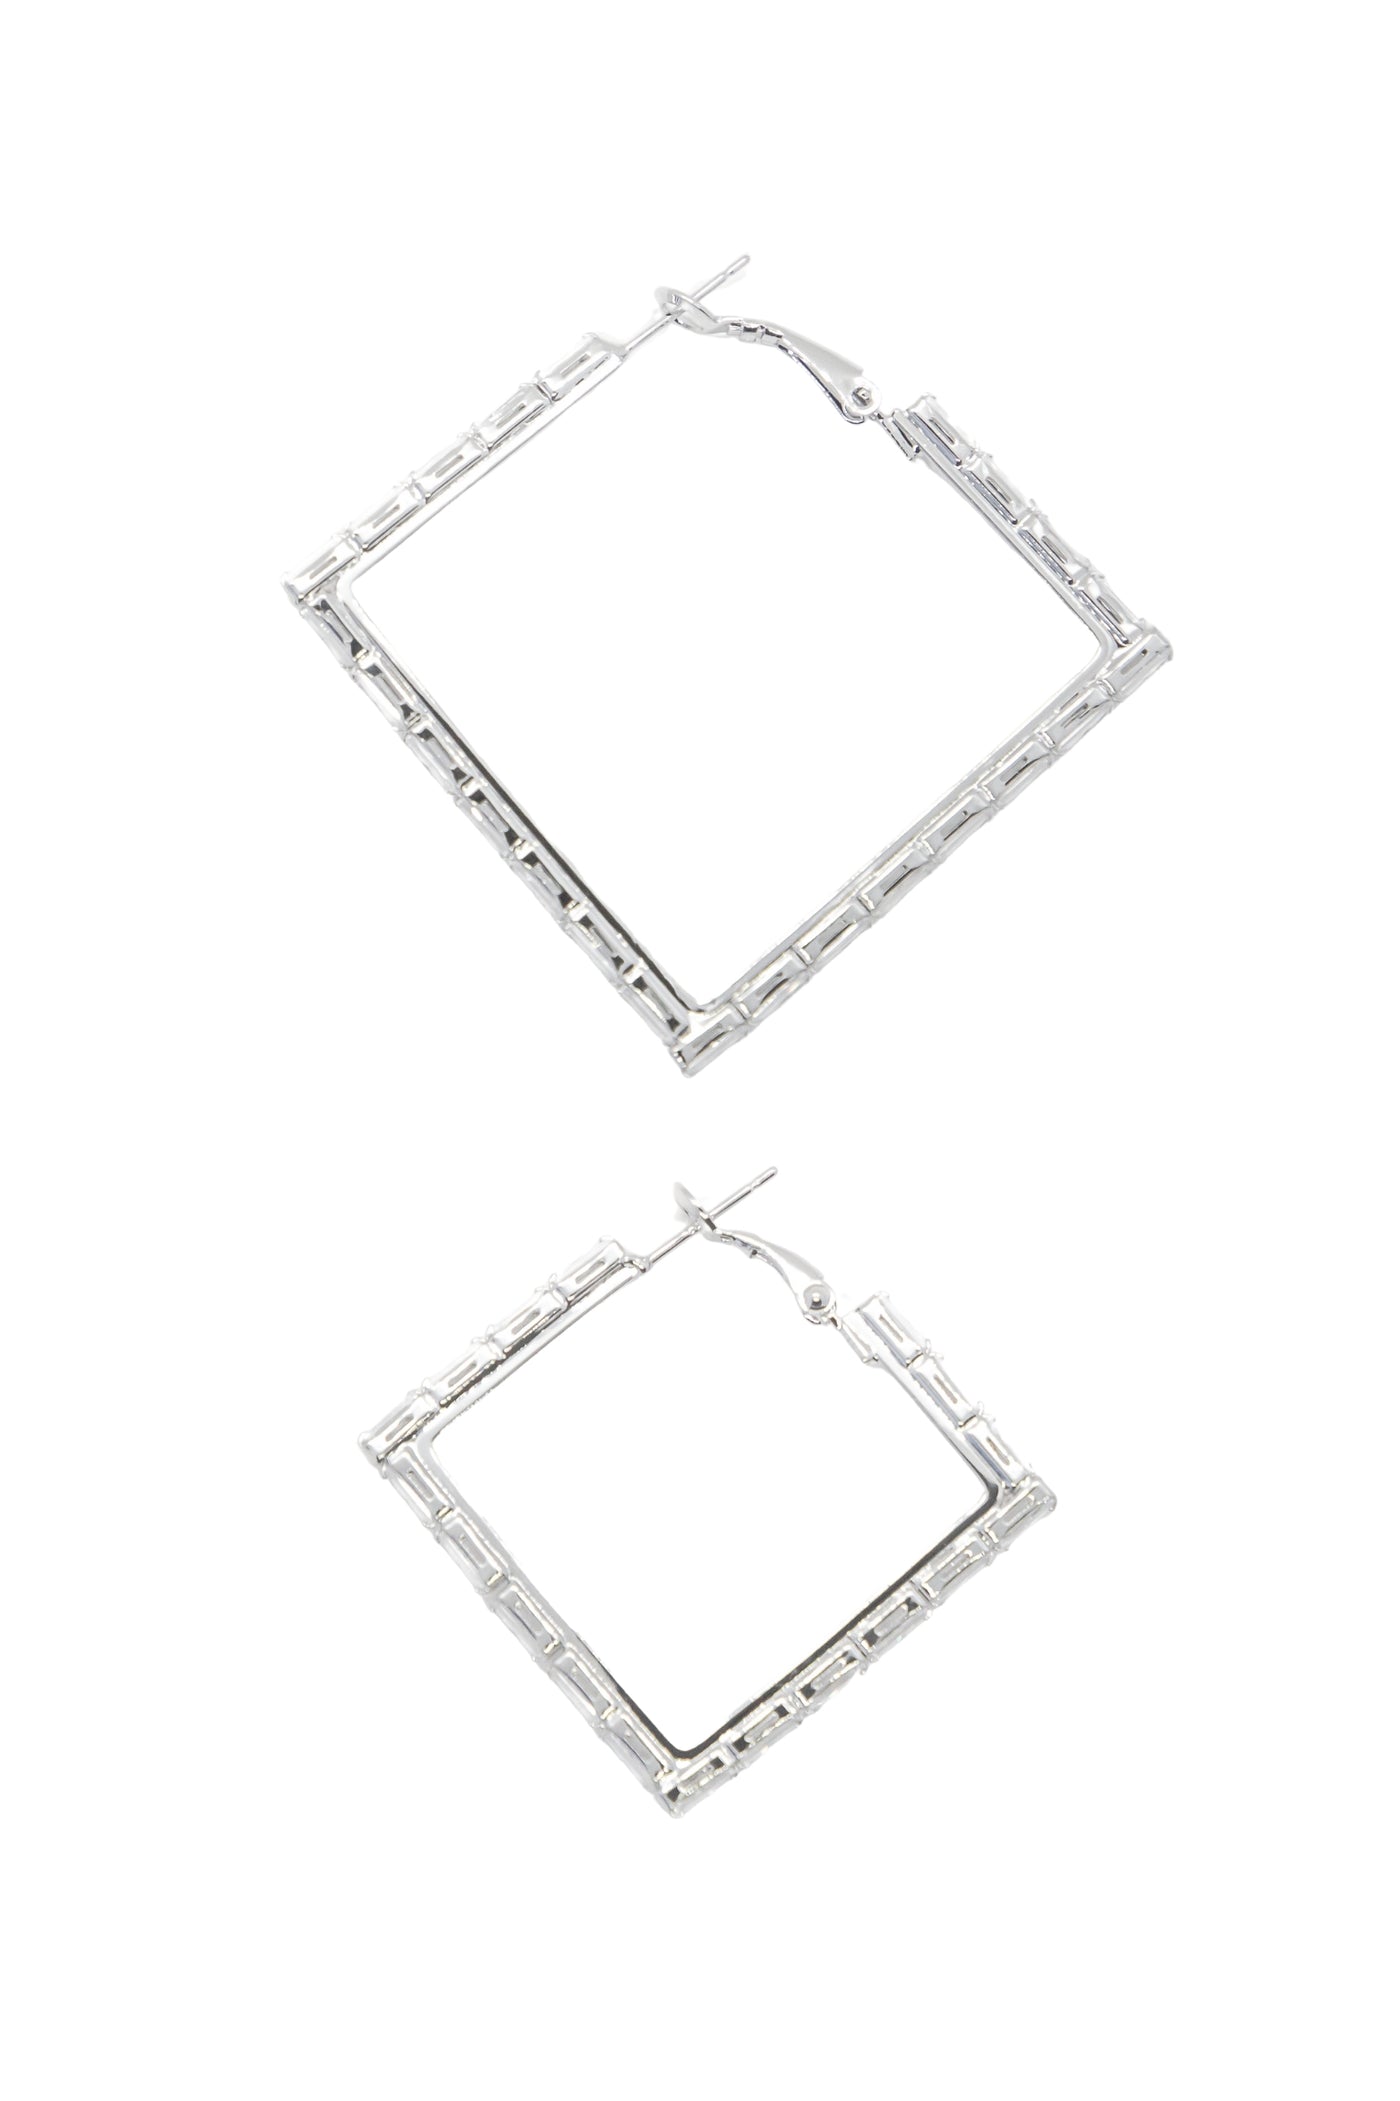 Medium Silver and Crystal square Hoops Earrings